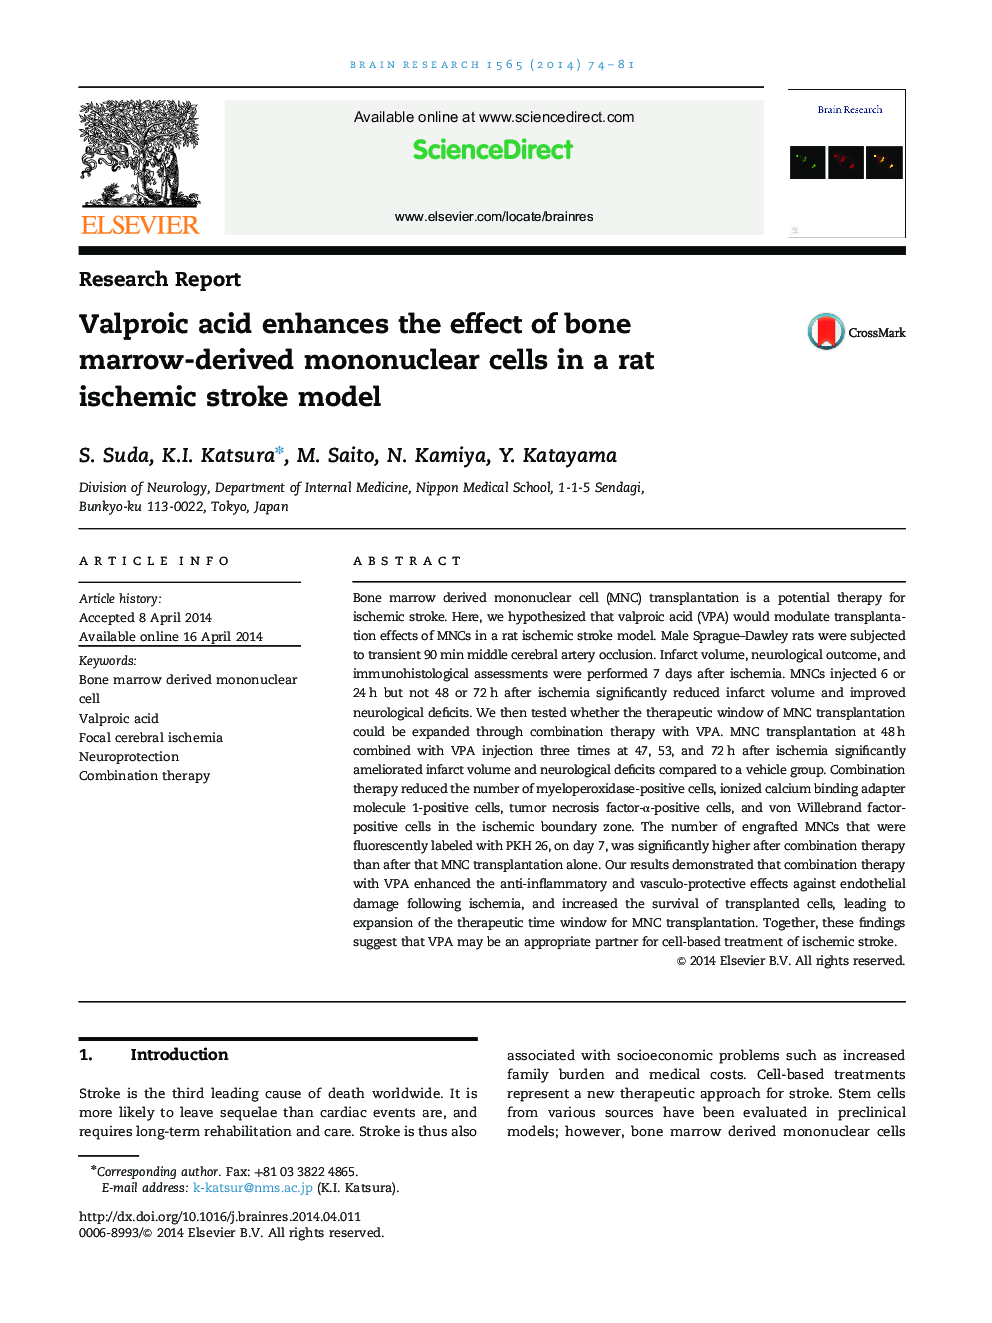 Valproic acid enhances the effect of bone marrow-derived mononuclear cells in a rat ischemic stroke model